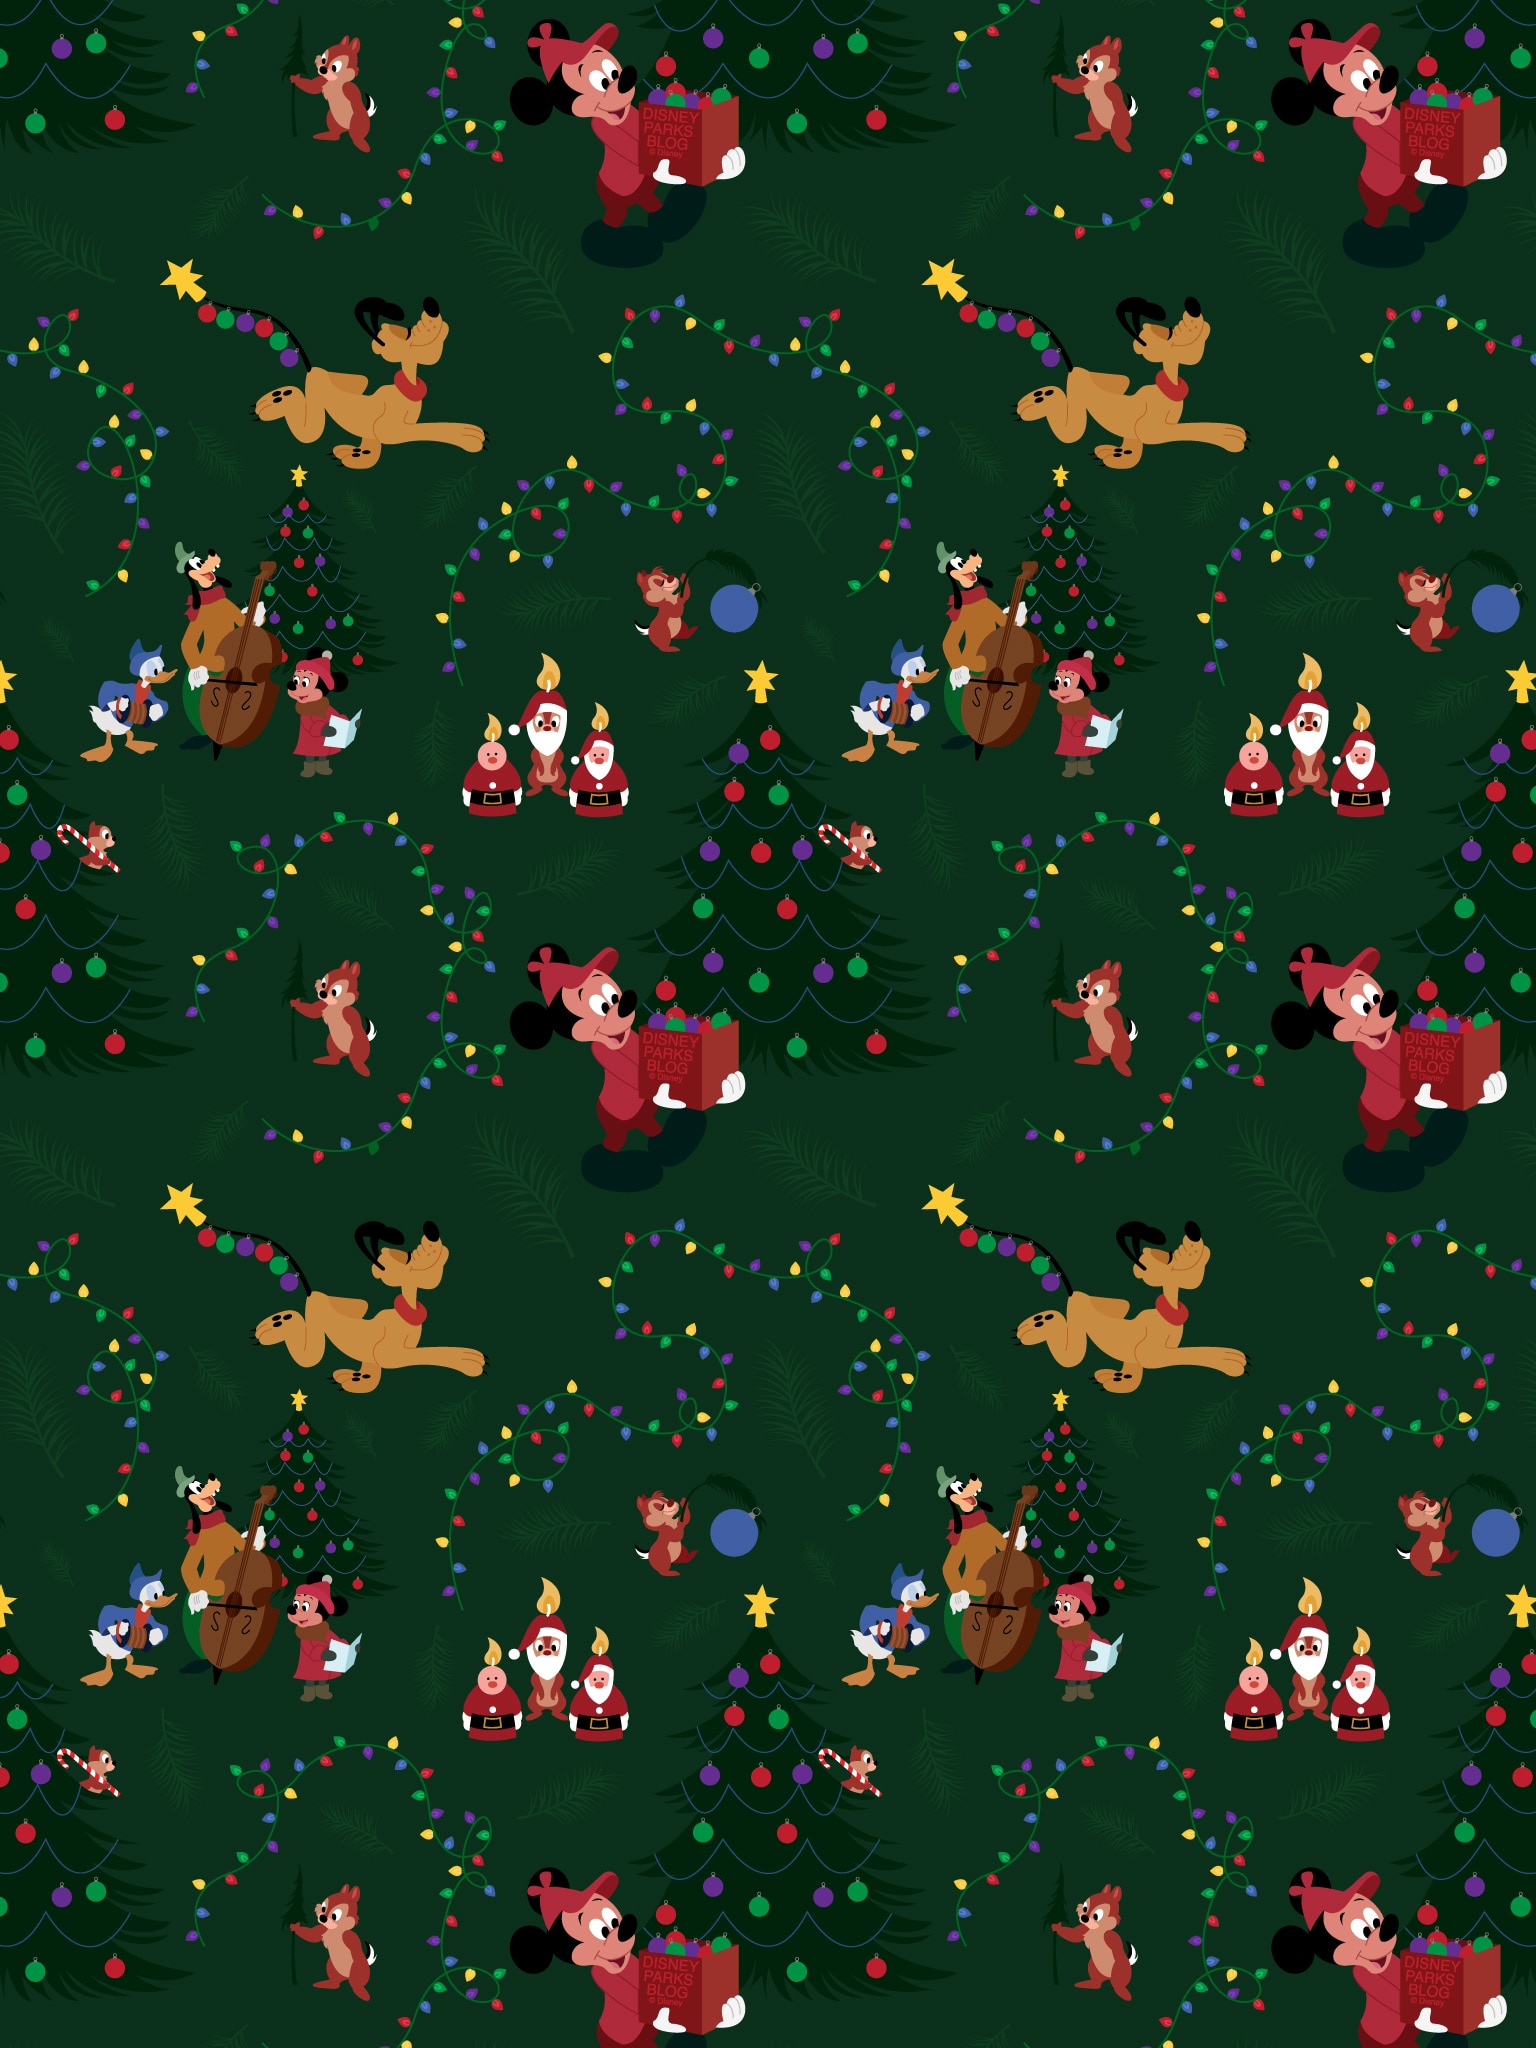 19 Mickey Mouse Pluto Christmas Wallpaper Desktop Ipad Disney Parks Blog